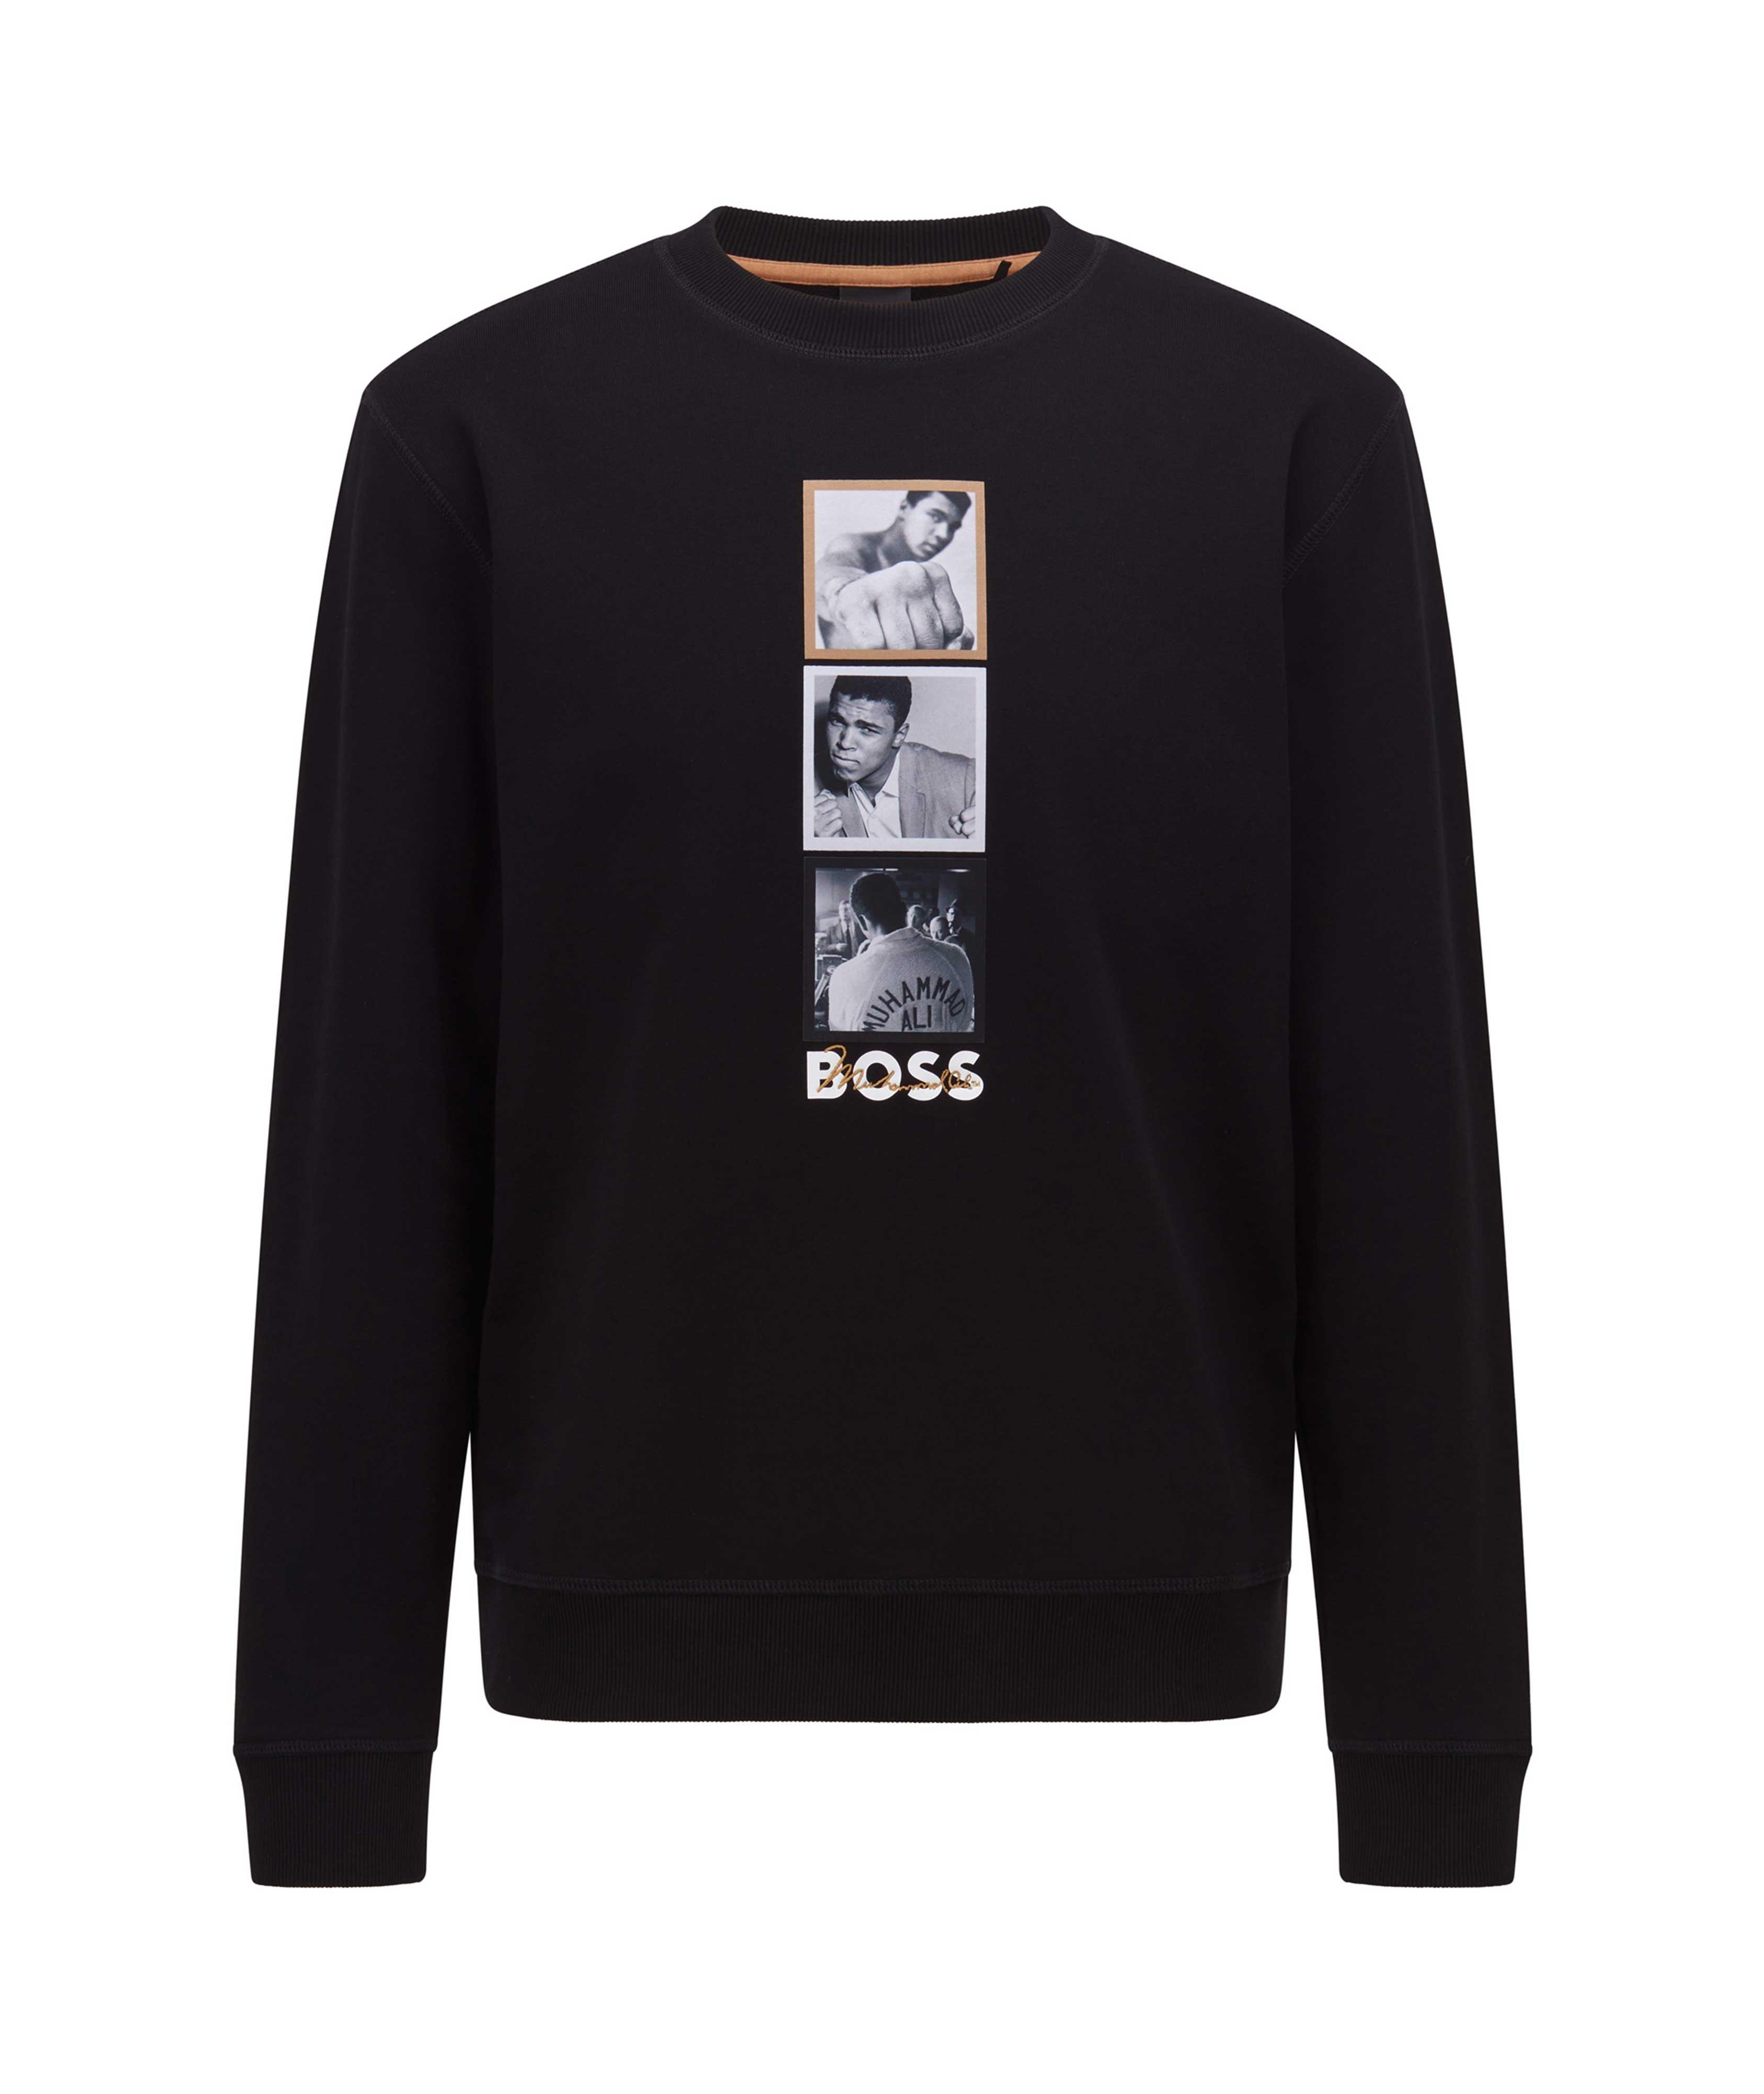 BOSS X Ali Cotton Sweatshirt image 0